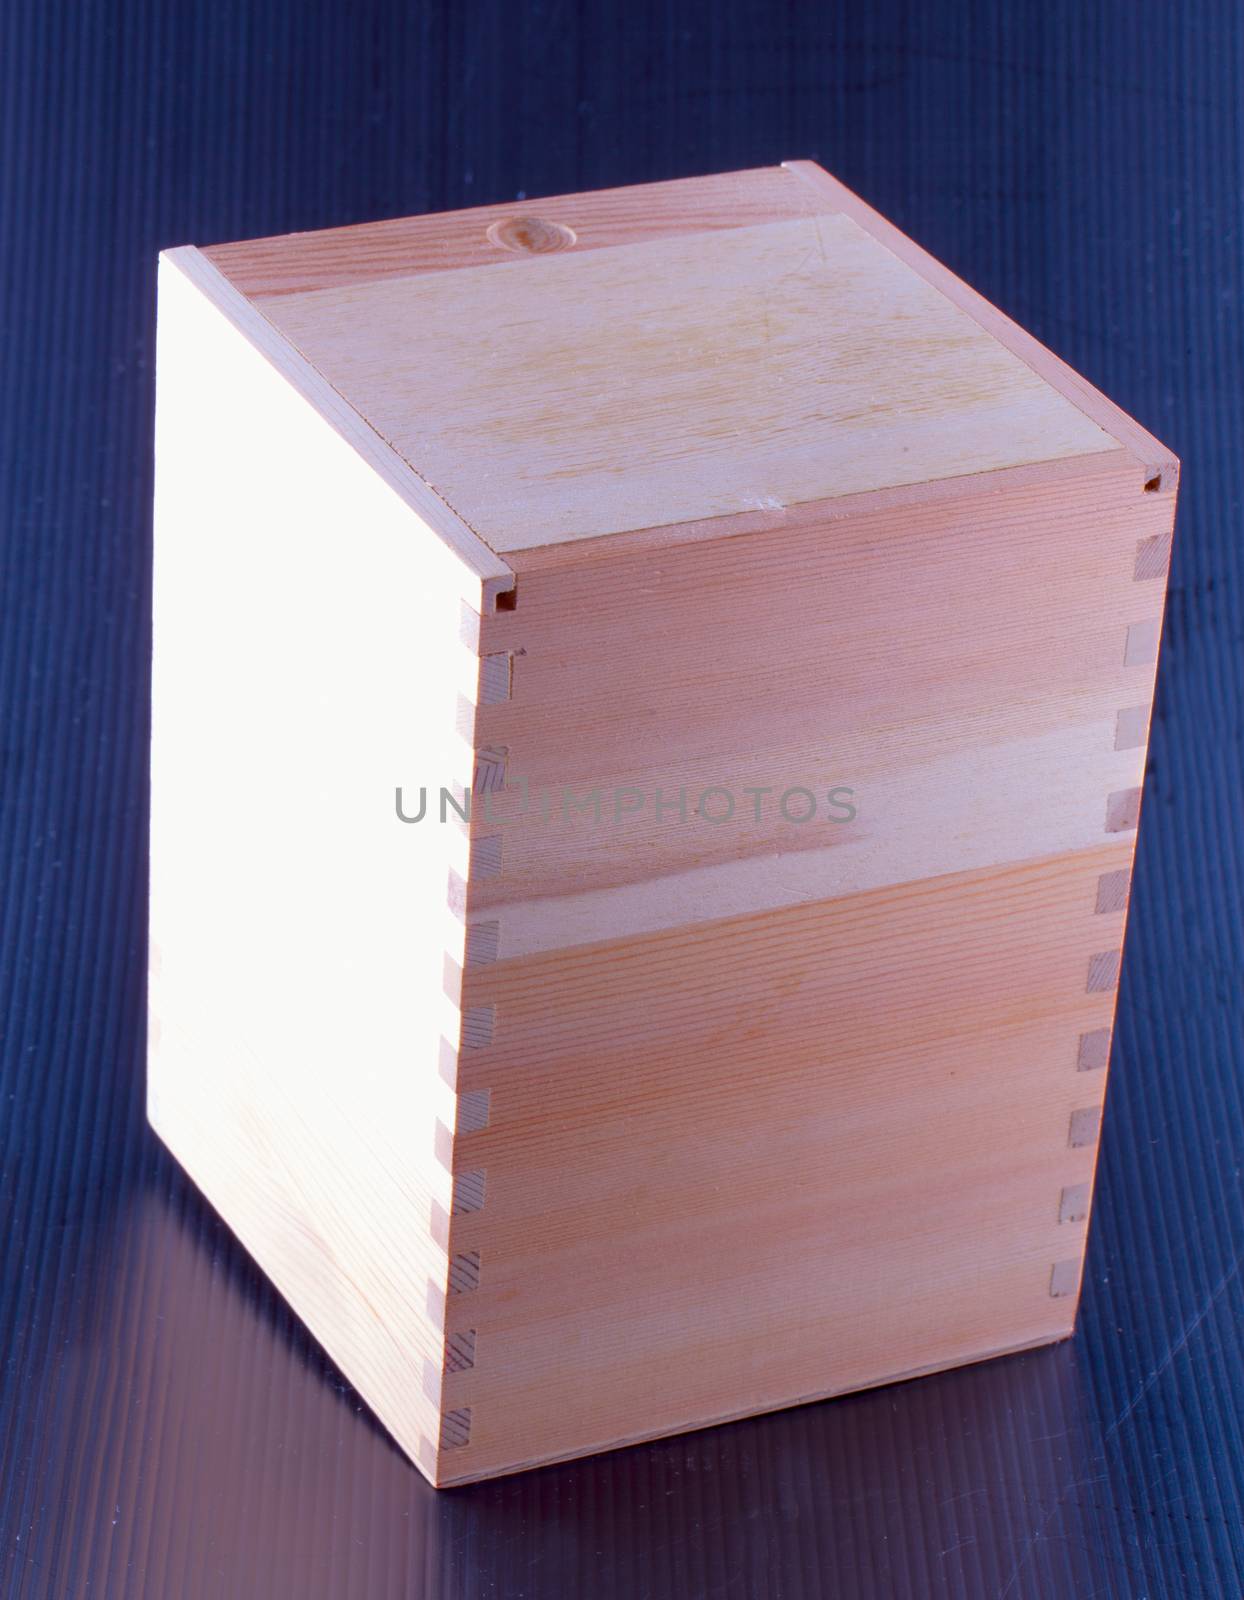 Wooden box over black background, vertical image